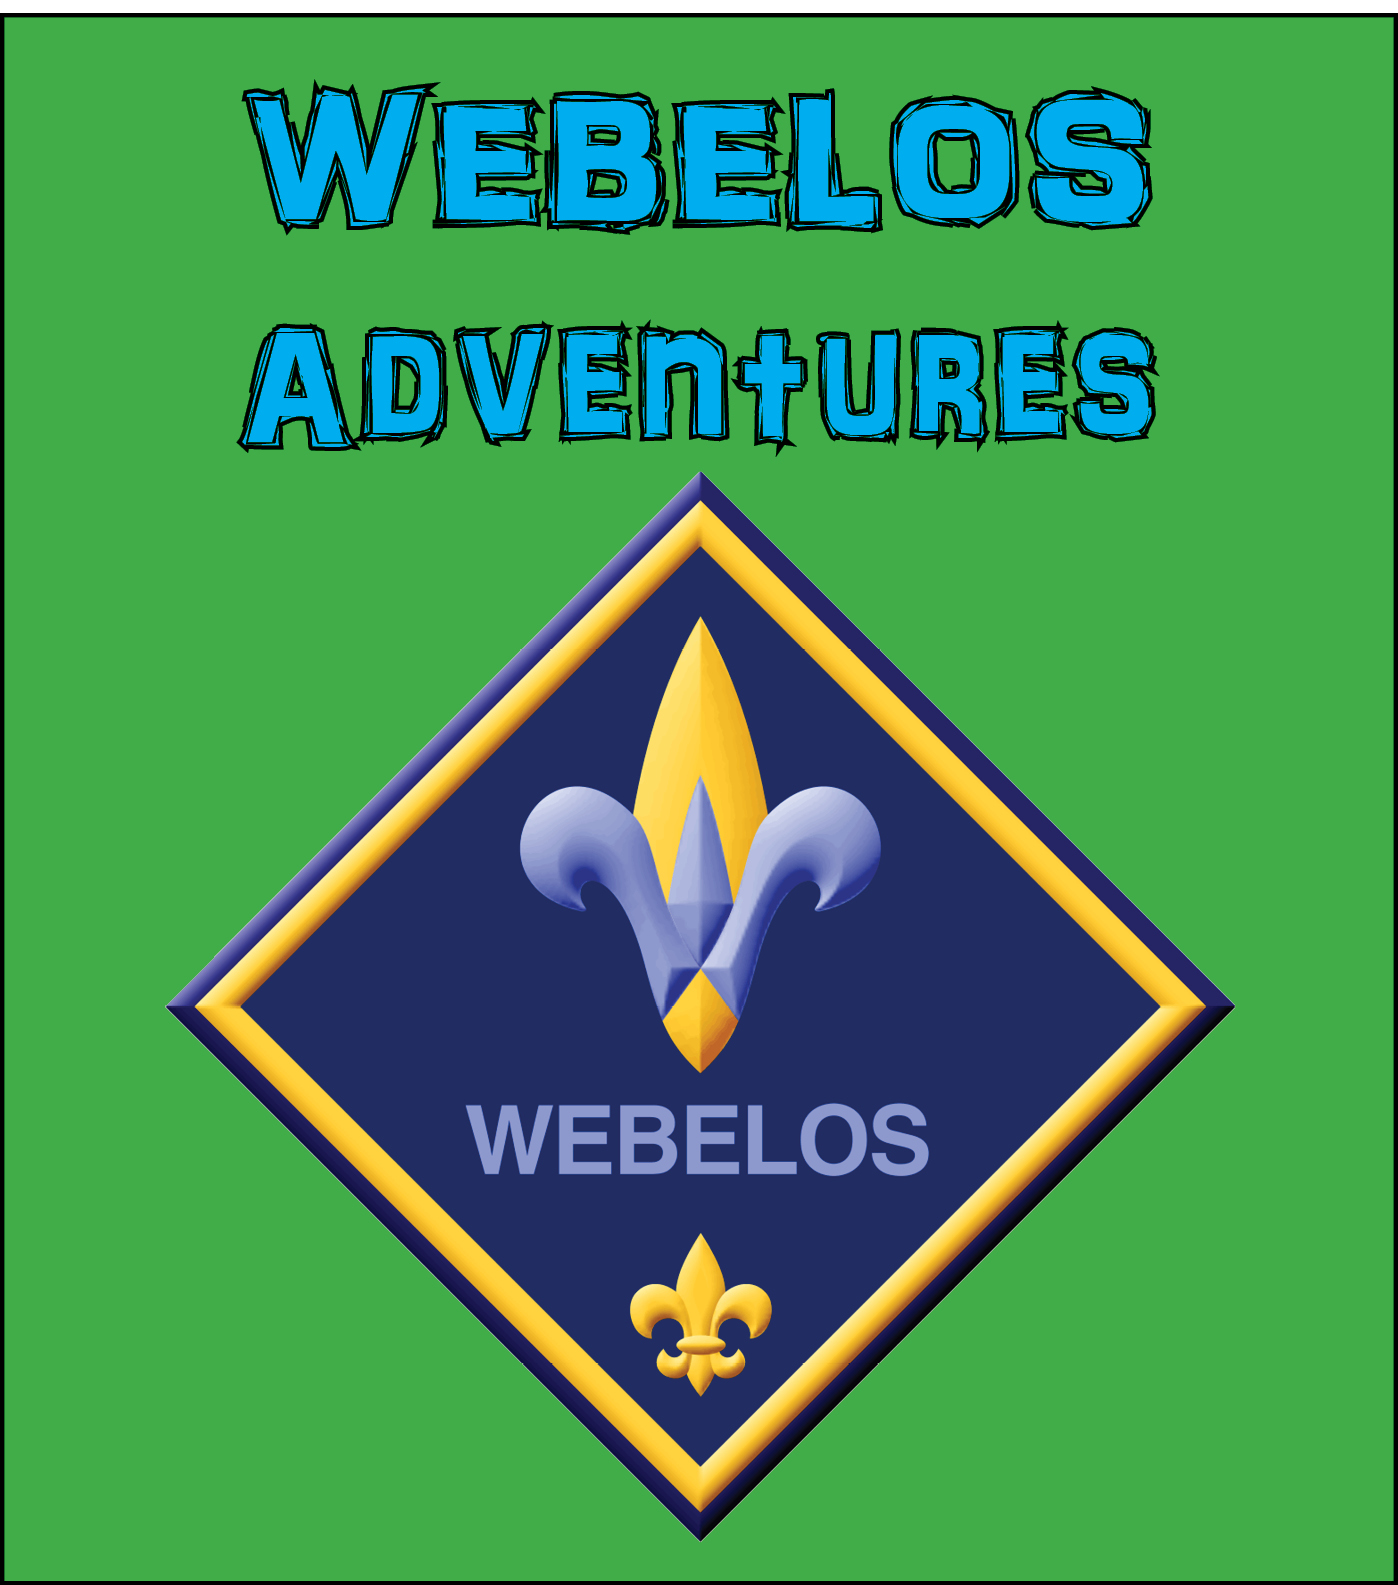 webelos adventures Sequoia Council Boy Scouts of America